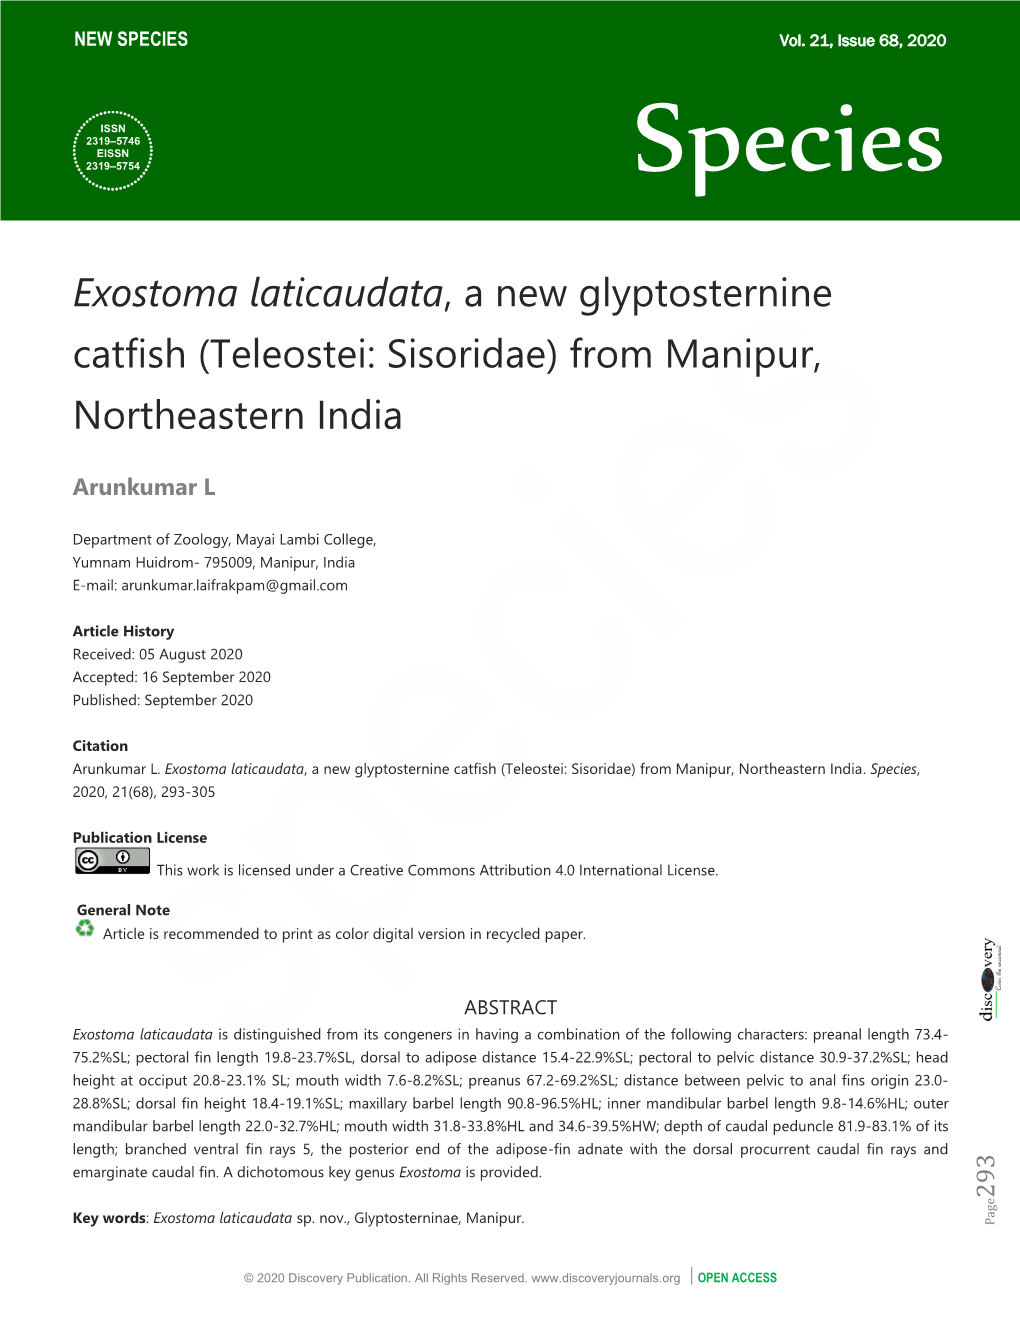 Exostoma Laticaudata, a New Glyptosternine Catfish (Teleostei: Sisoridae) from Manipur, Northeastern India